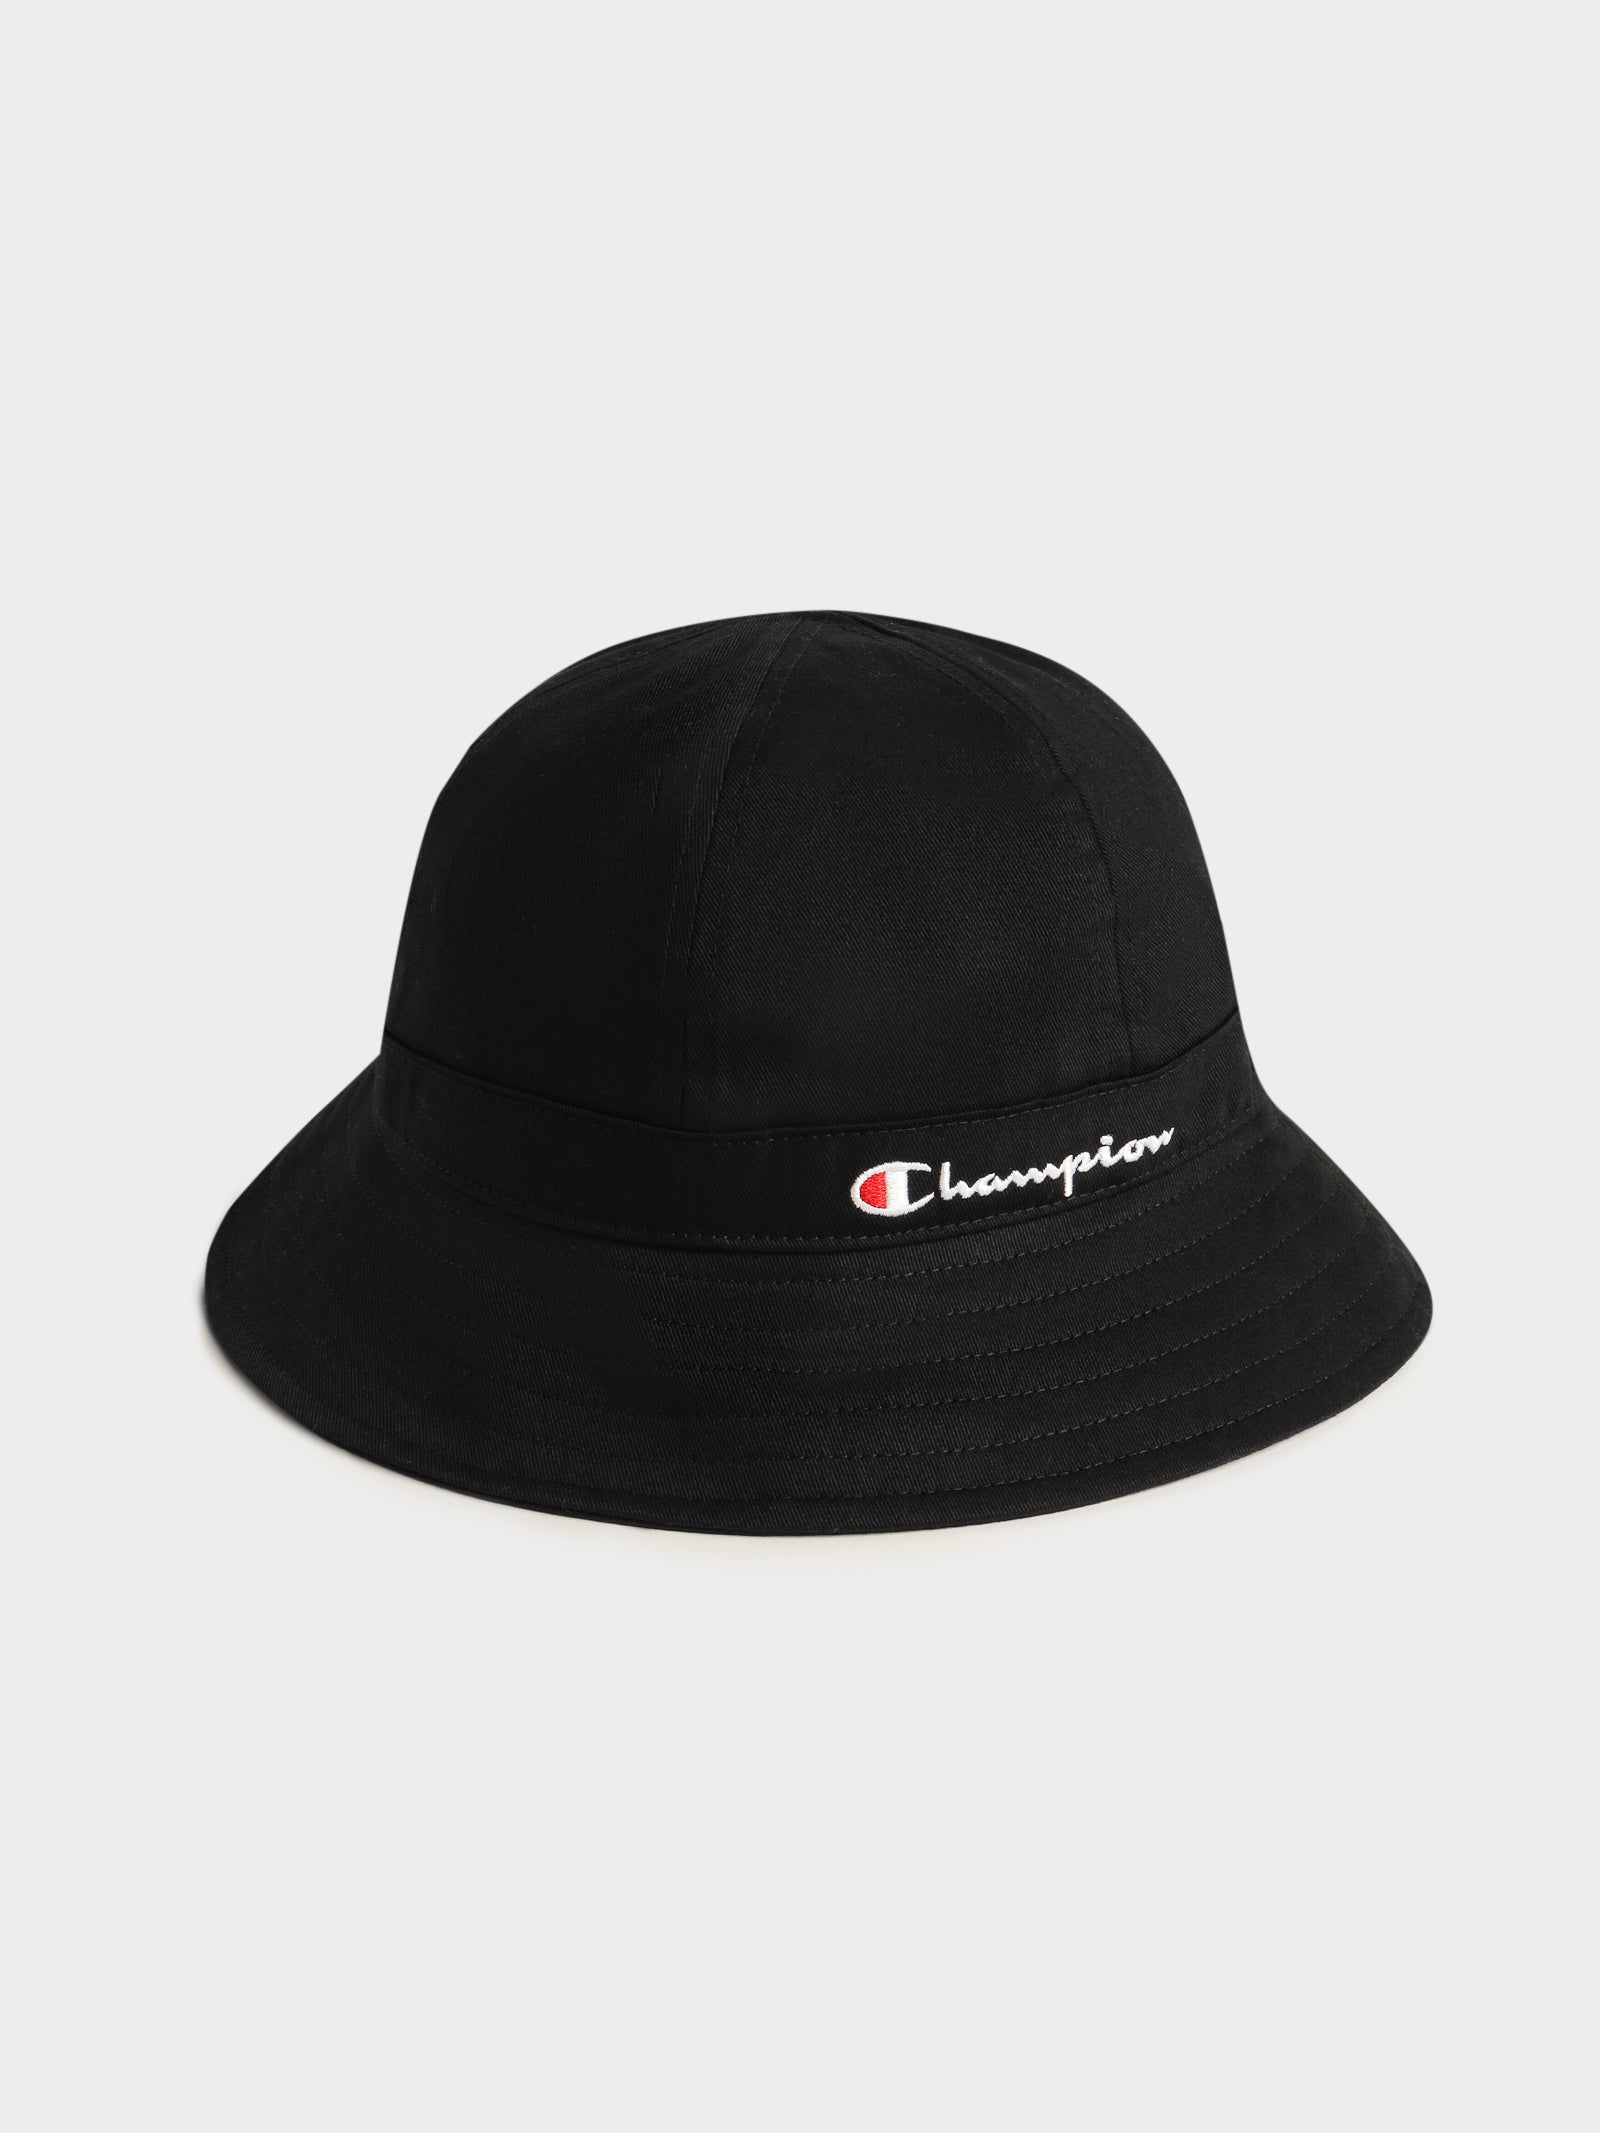 C Life Fisherman Hat in Black - Glue Store